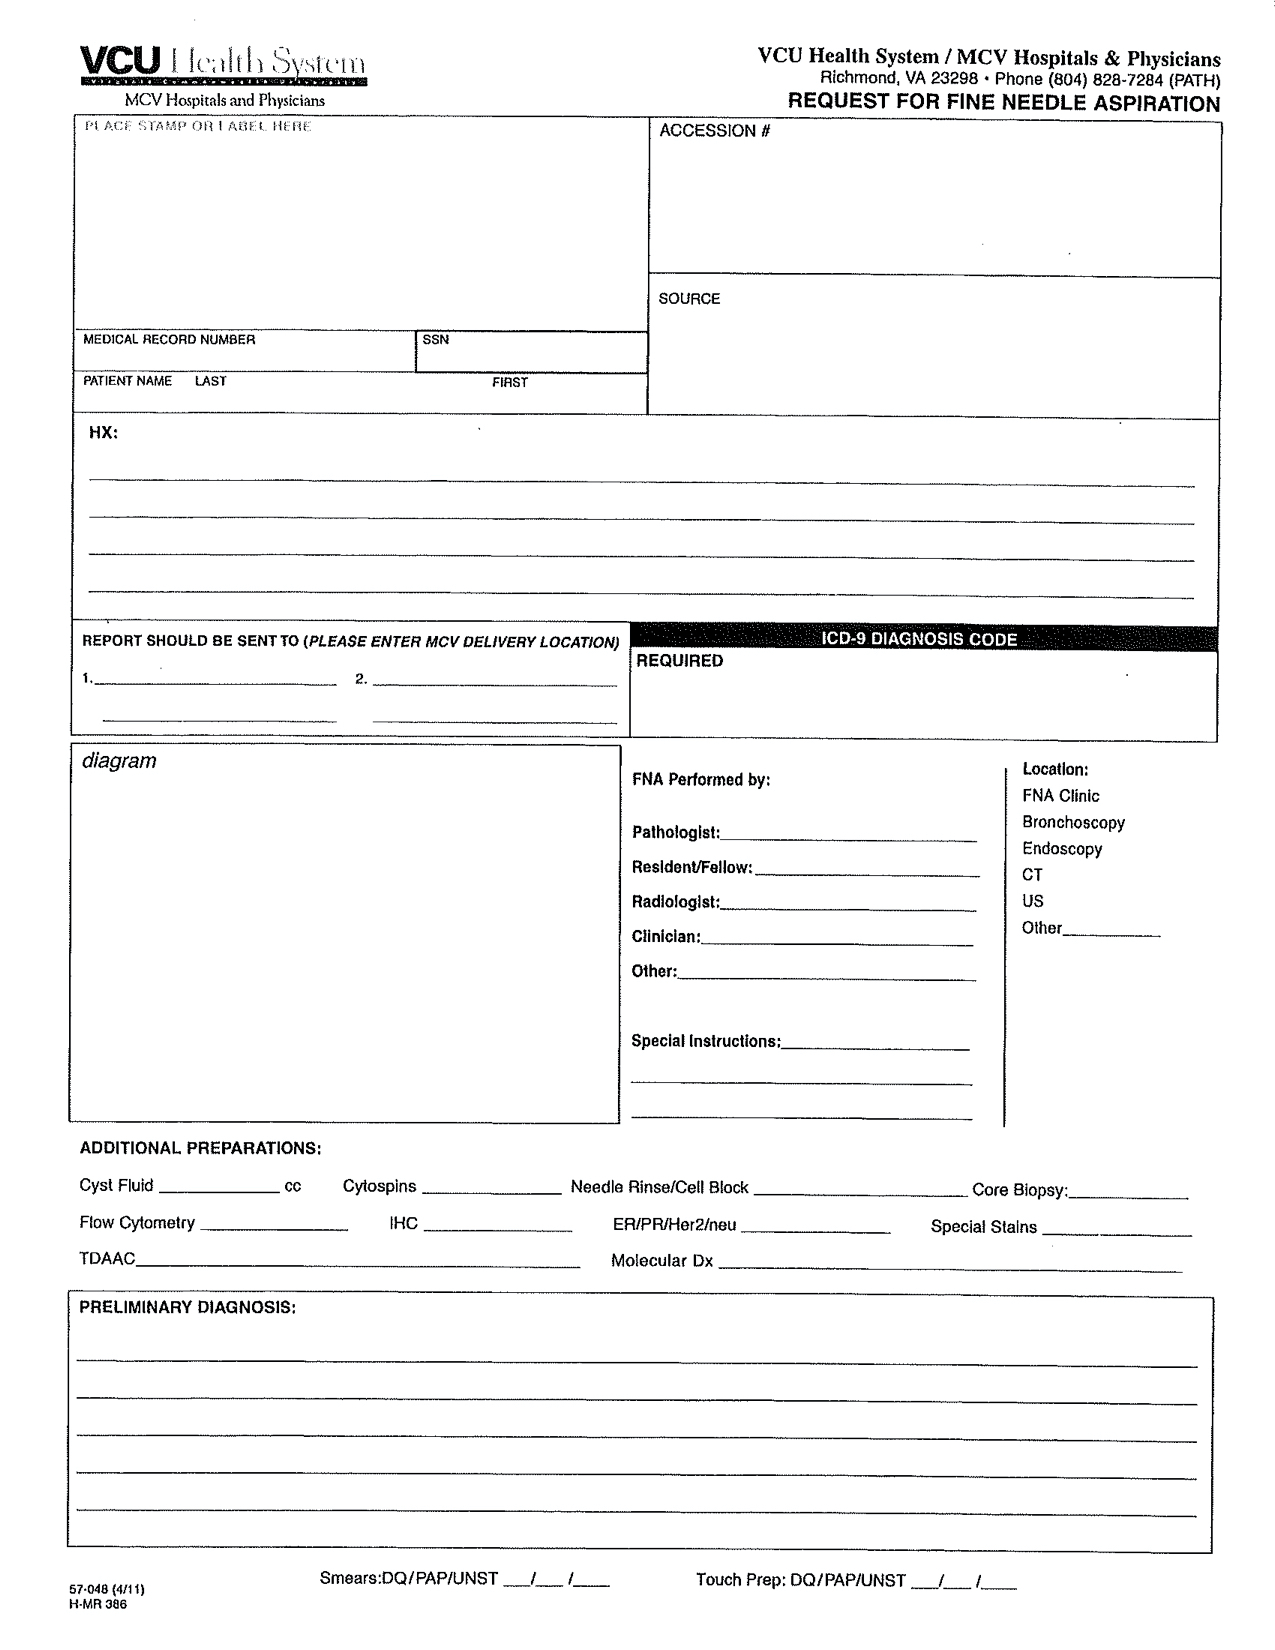 Blank FNA procedure form